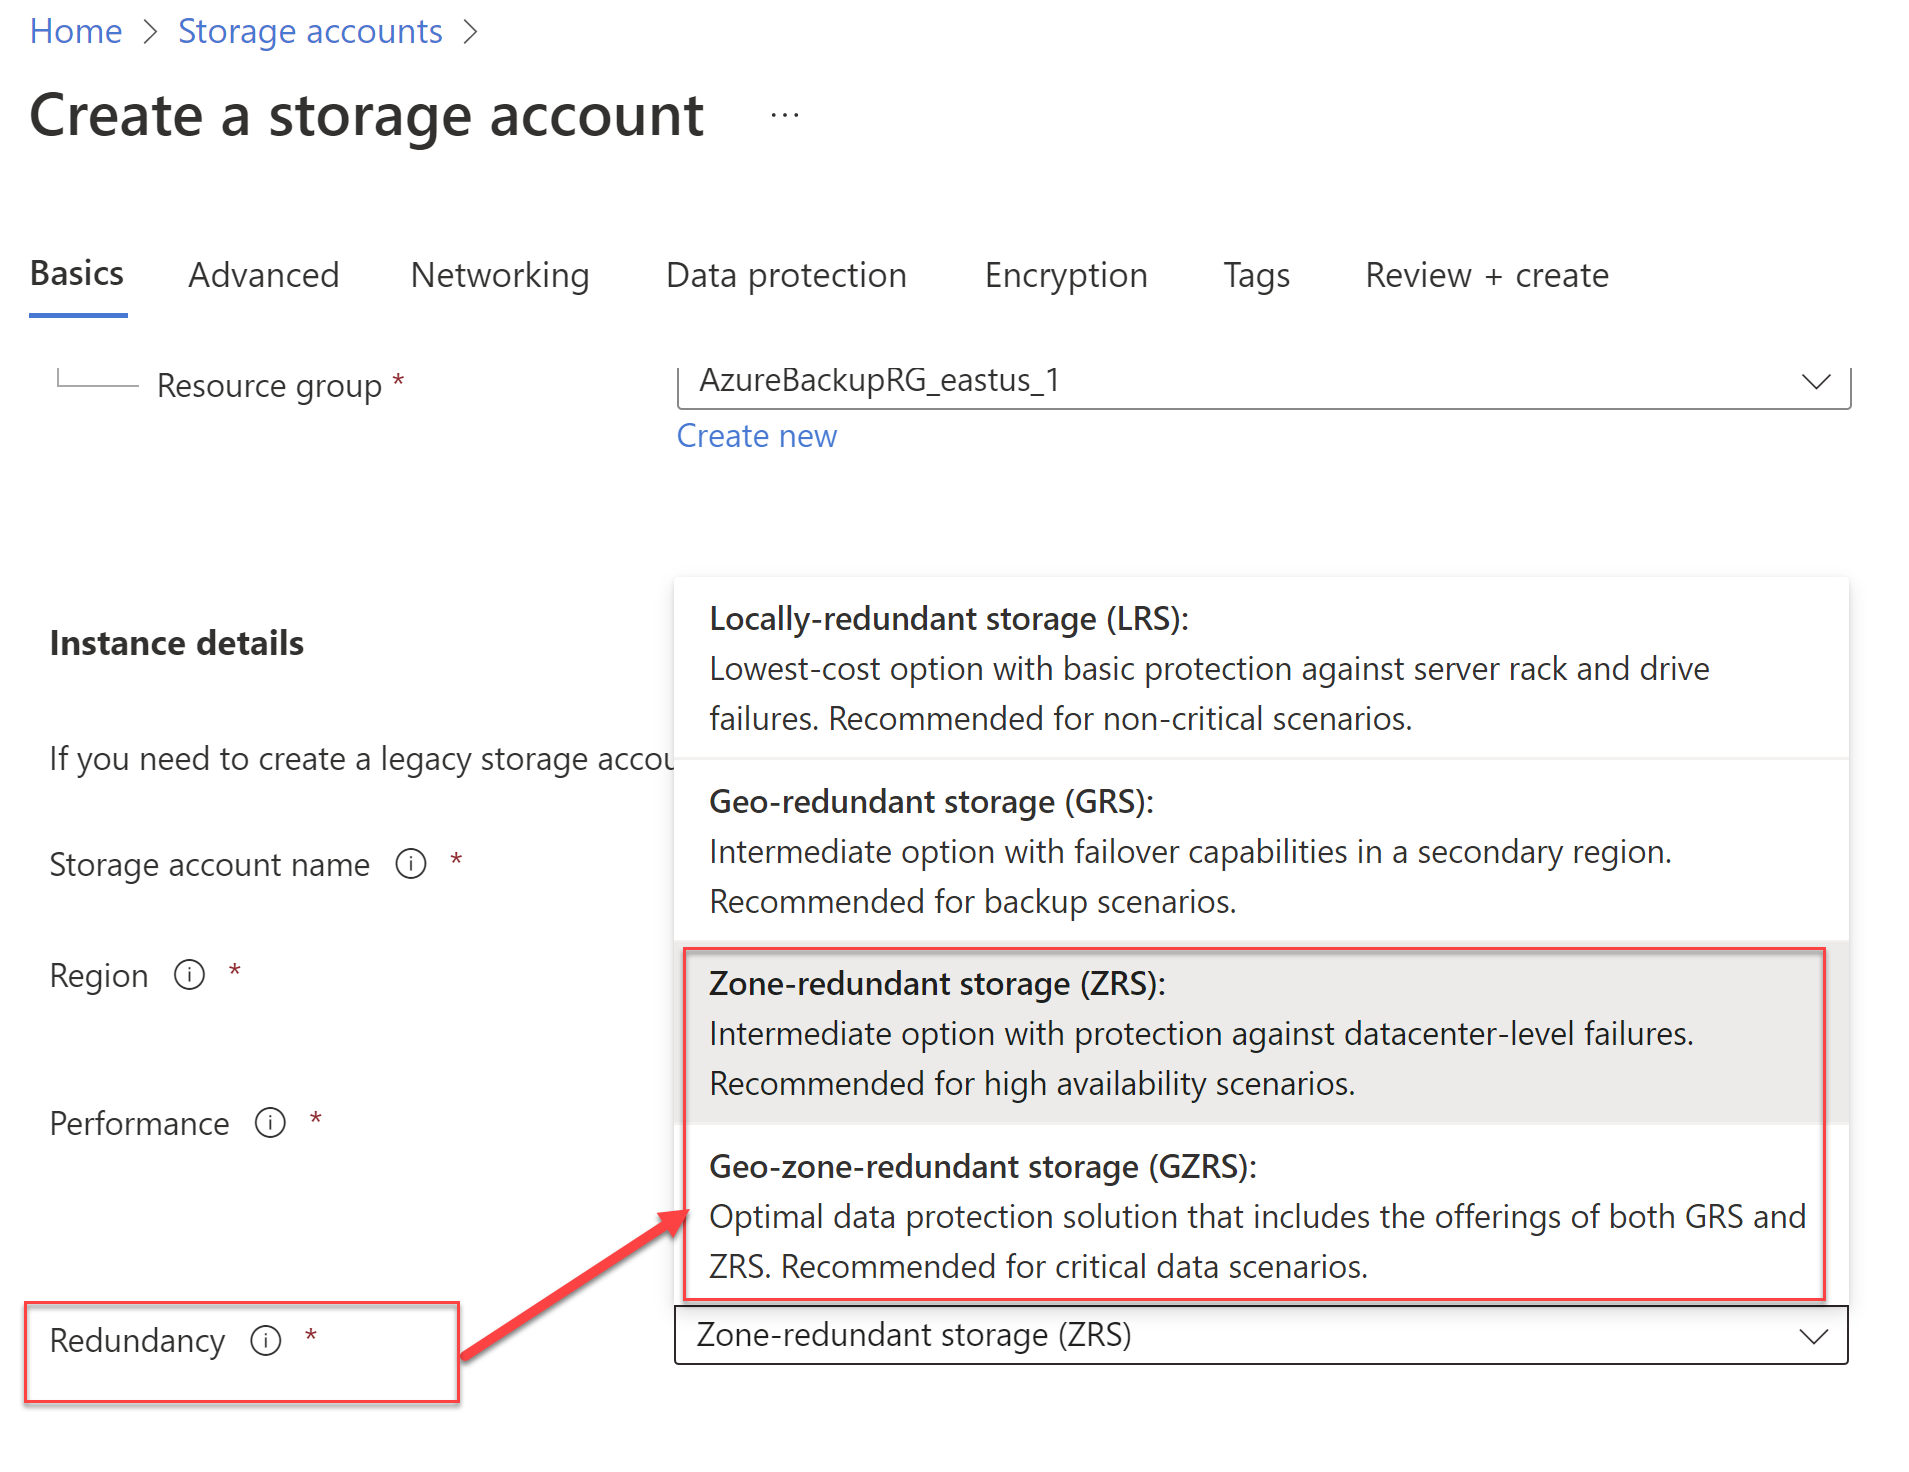 ZRS Option for Storage Accounts